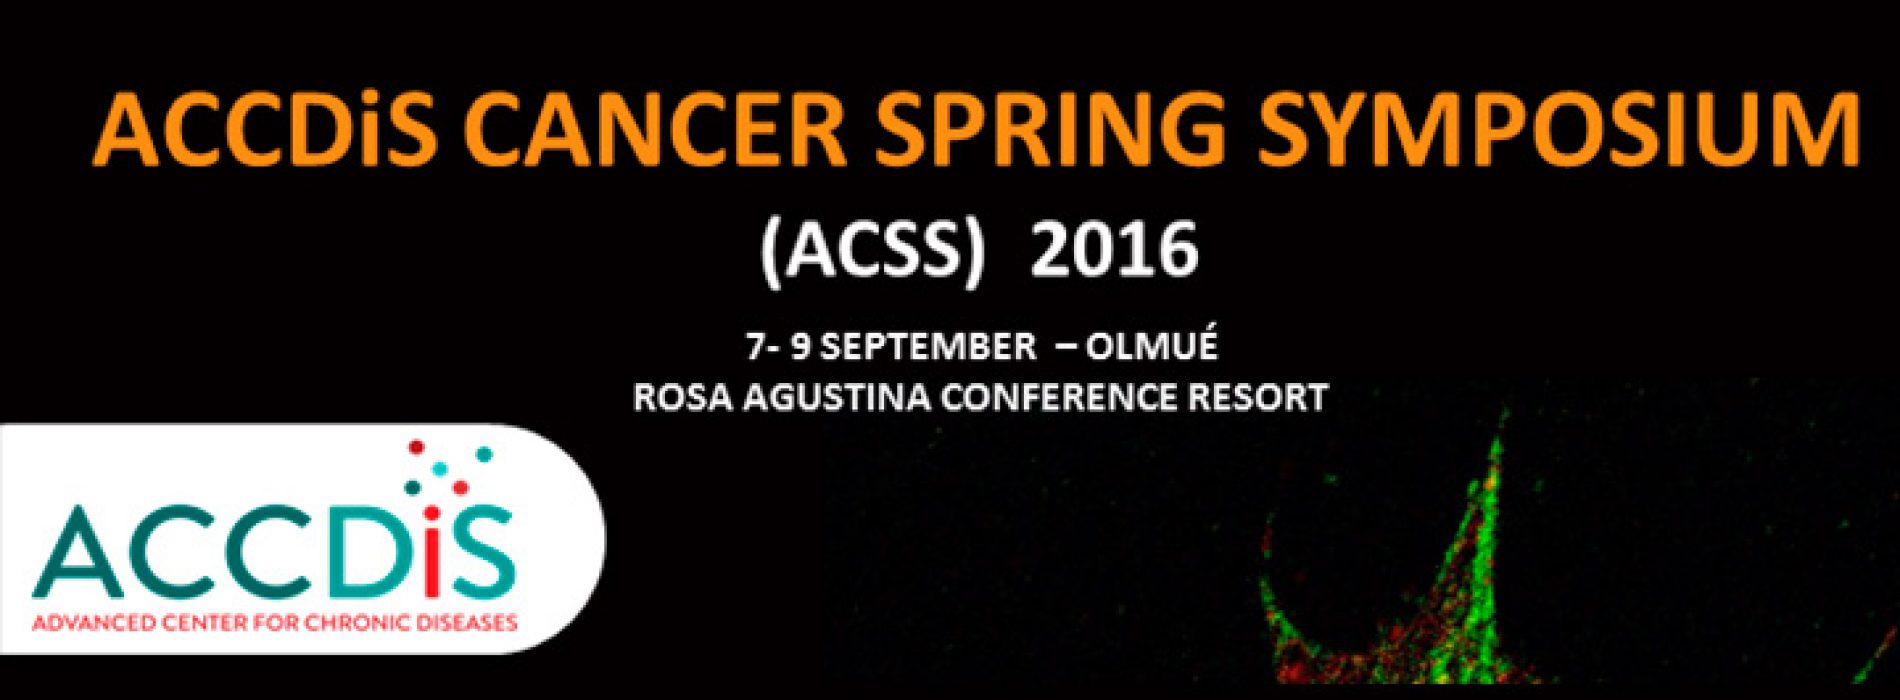 ACCDiS Cancer Spring Symposium (ACSS) 2016